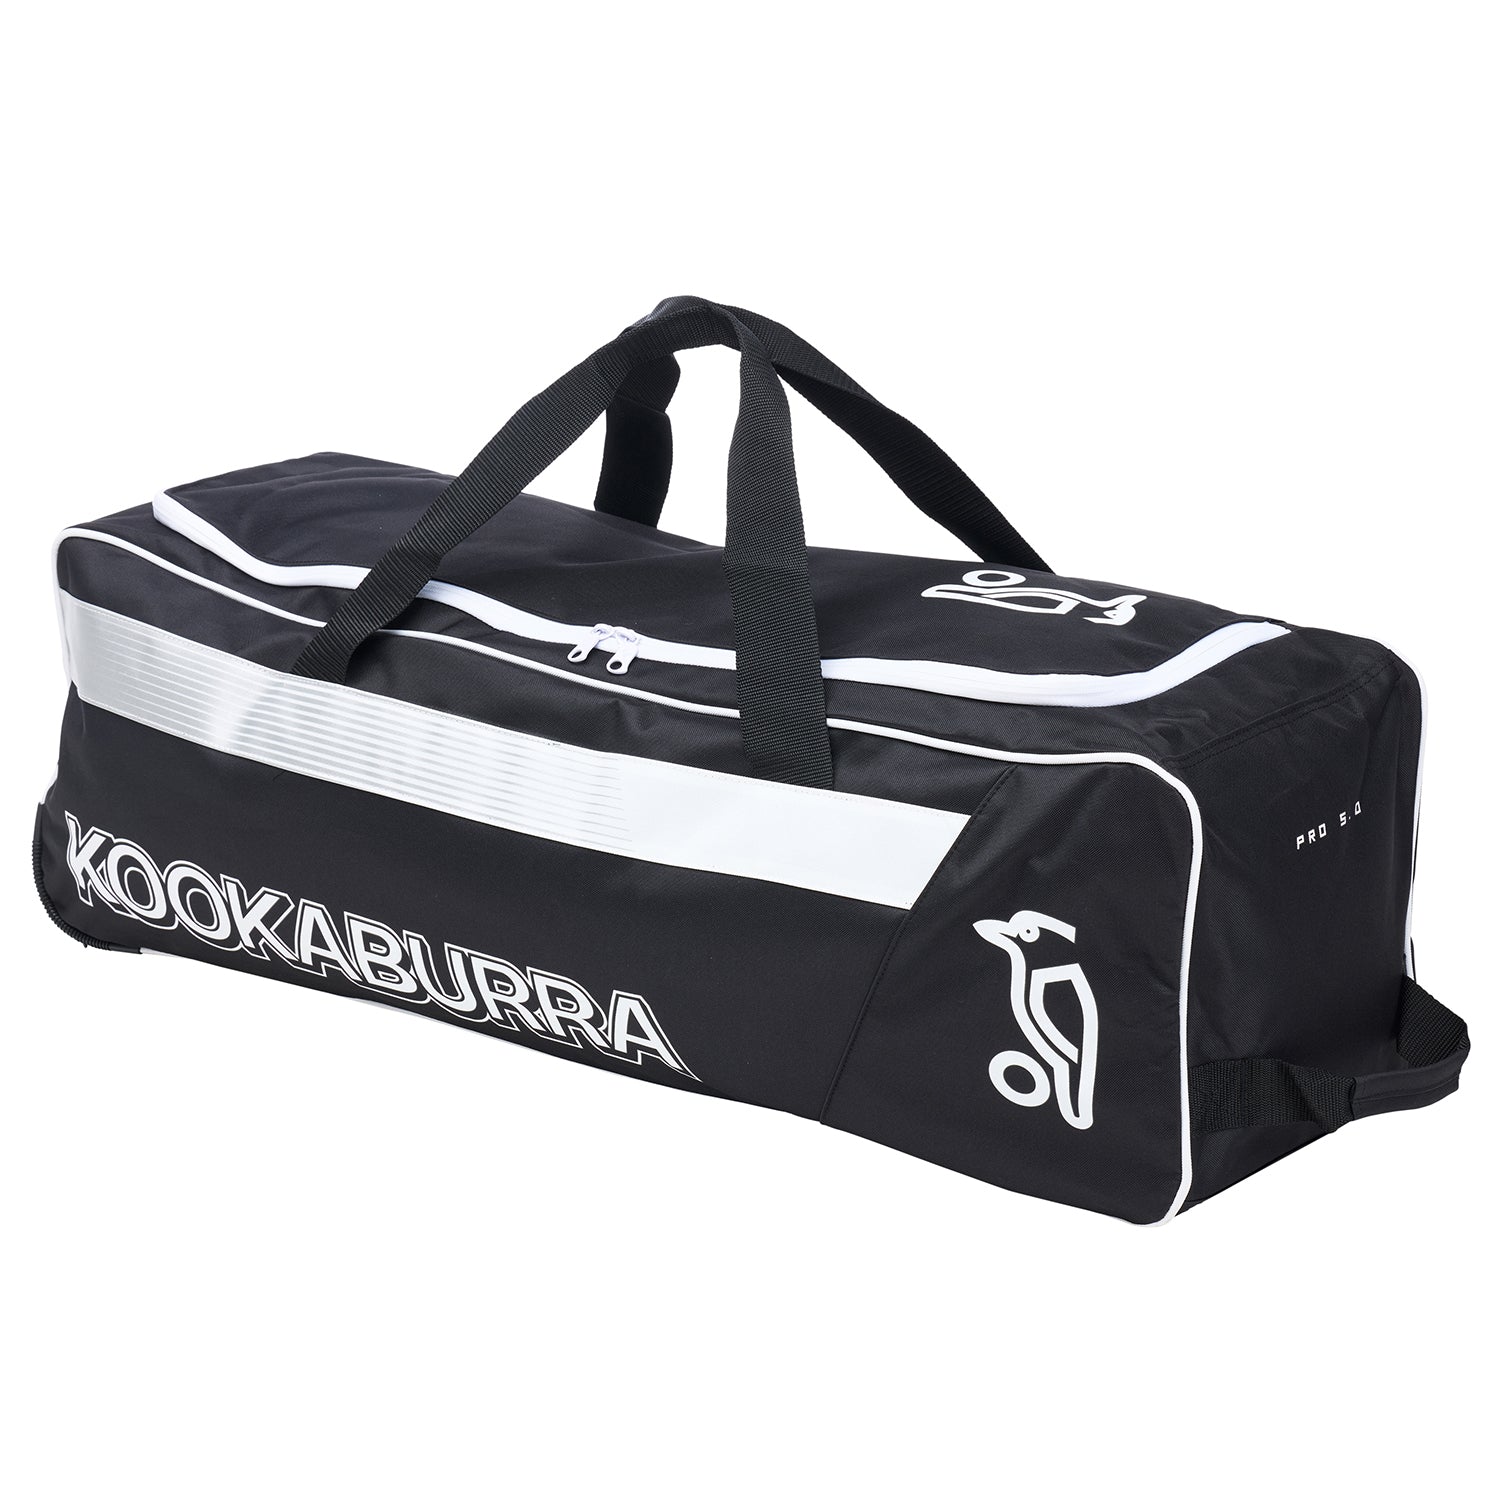 Kookaburra Pro 5.0 Cricket Wheelie Bag